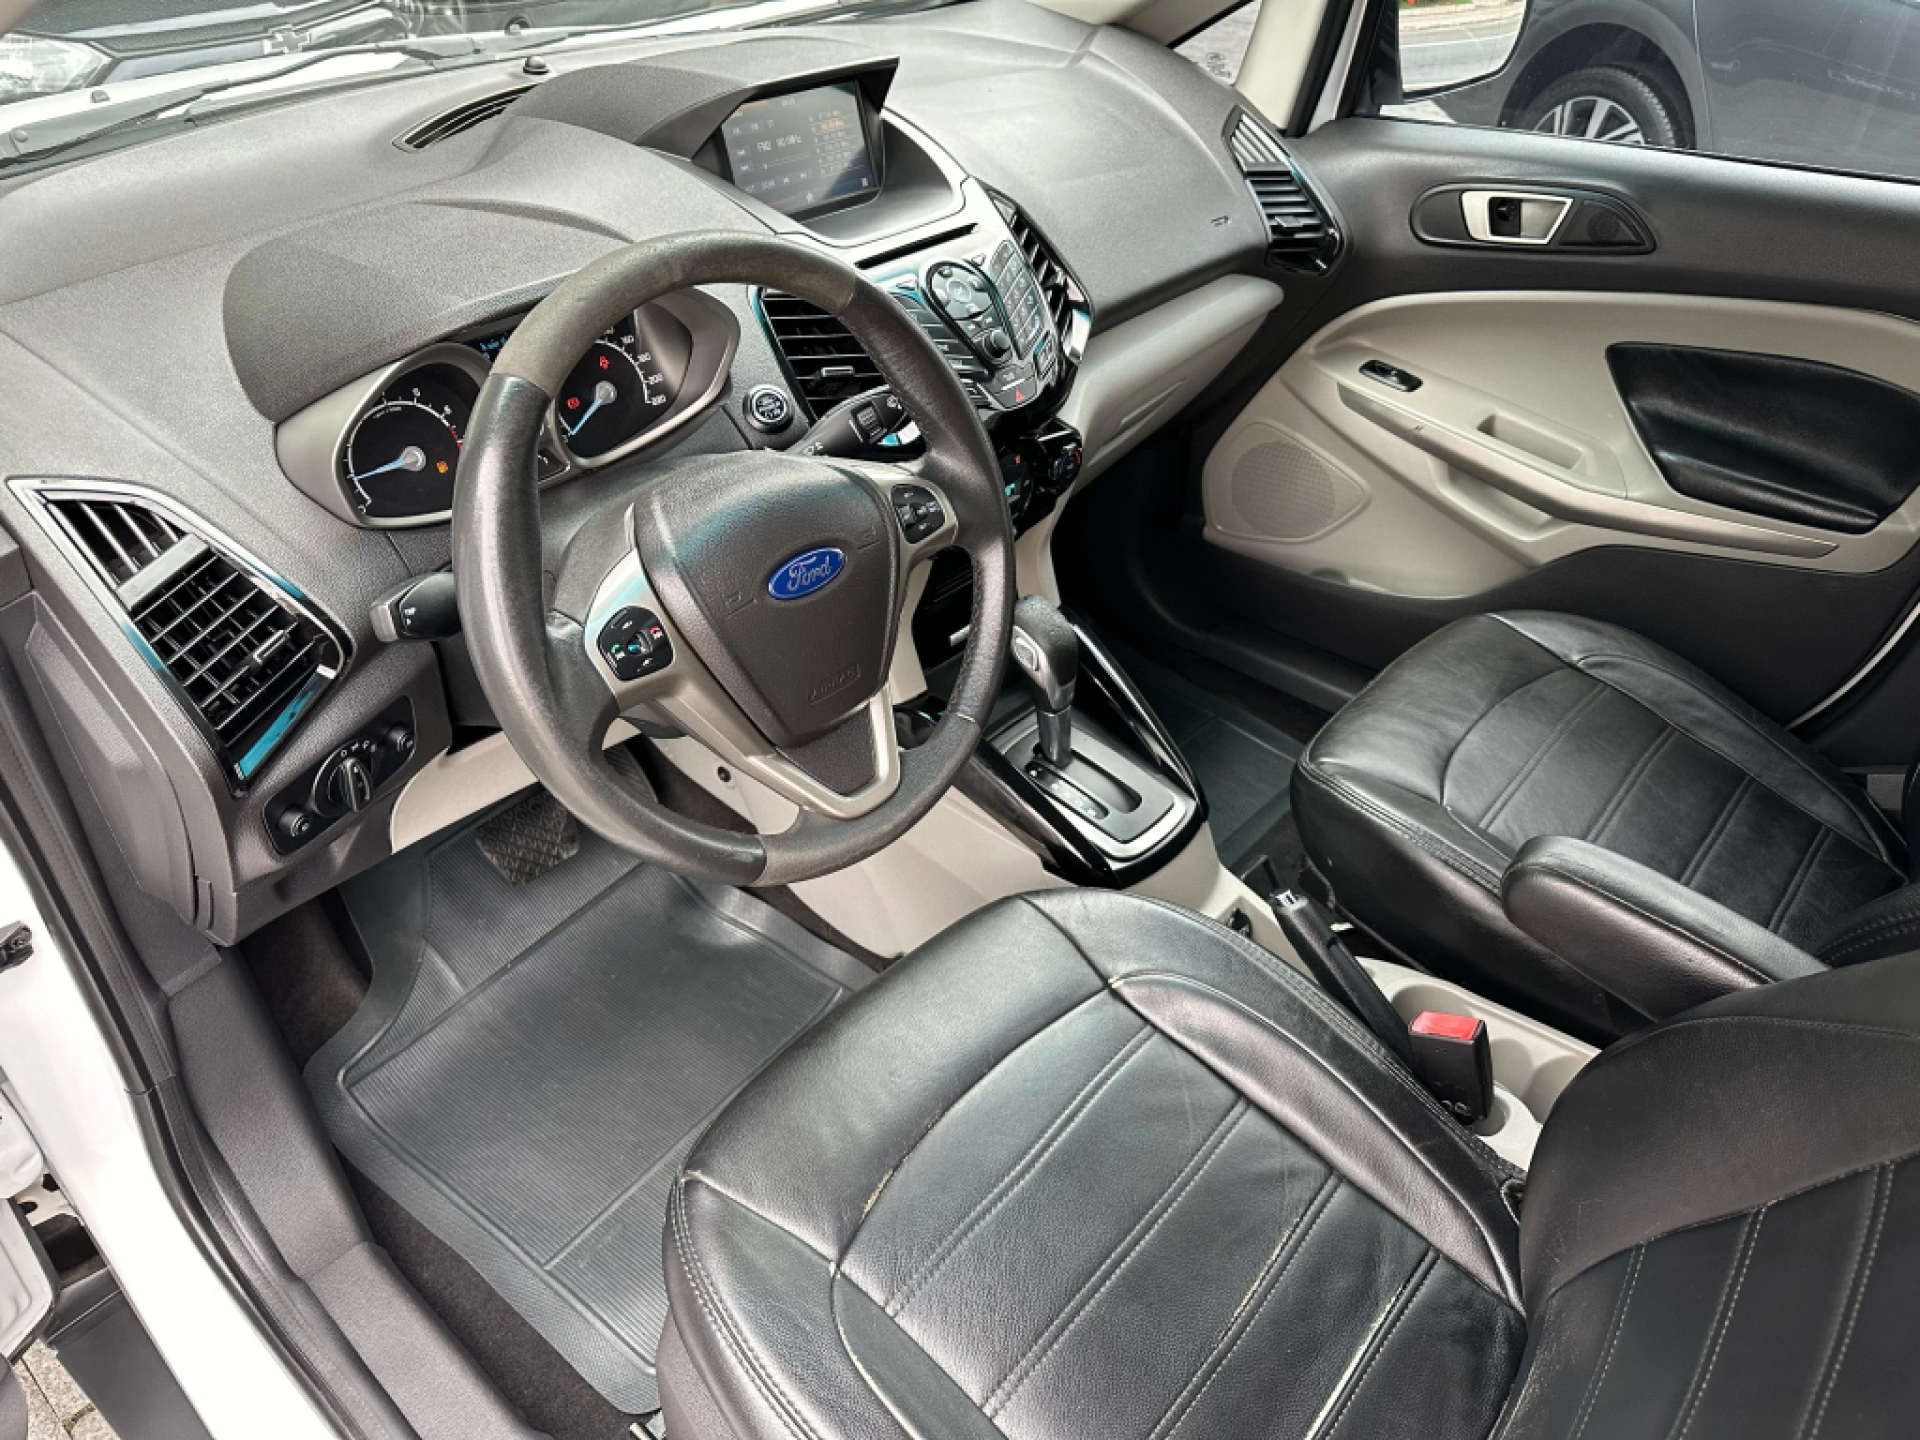 Ford Ecosport 2.0 2014